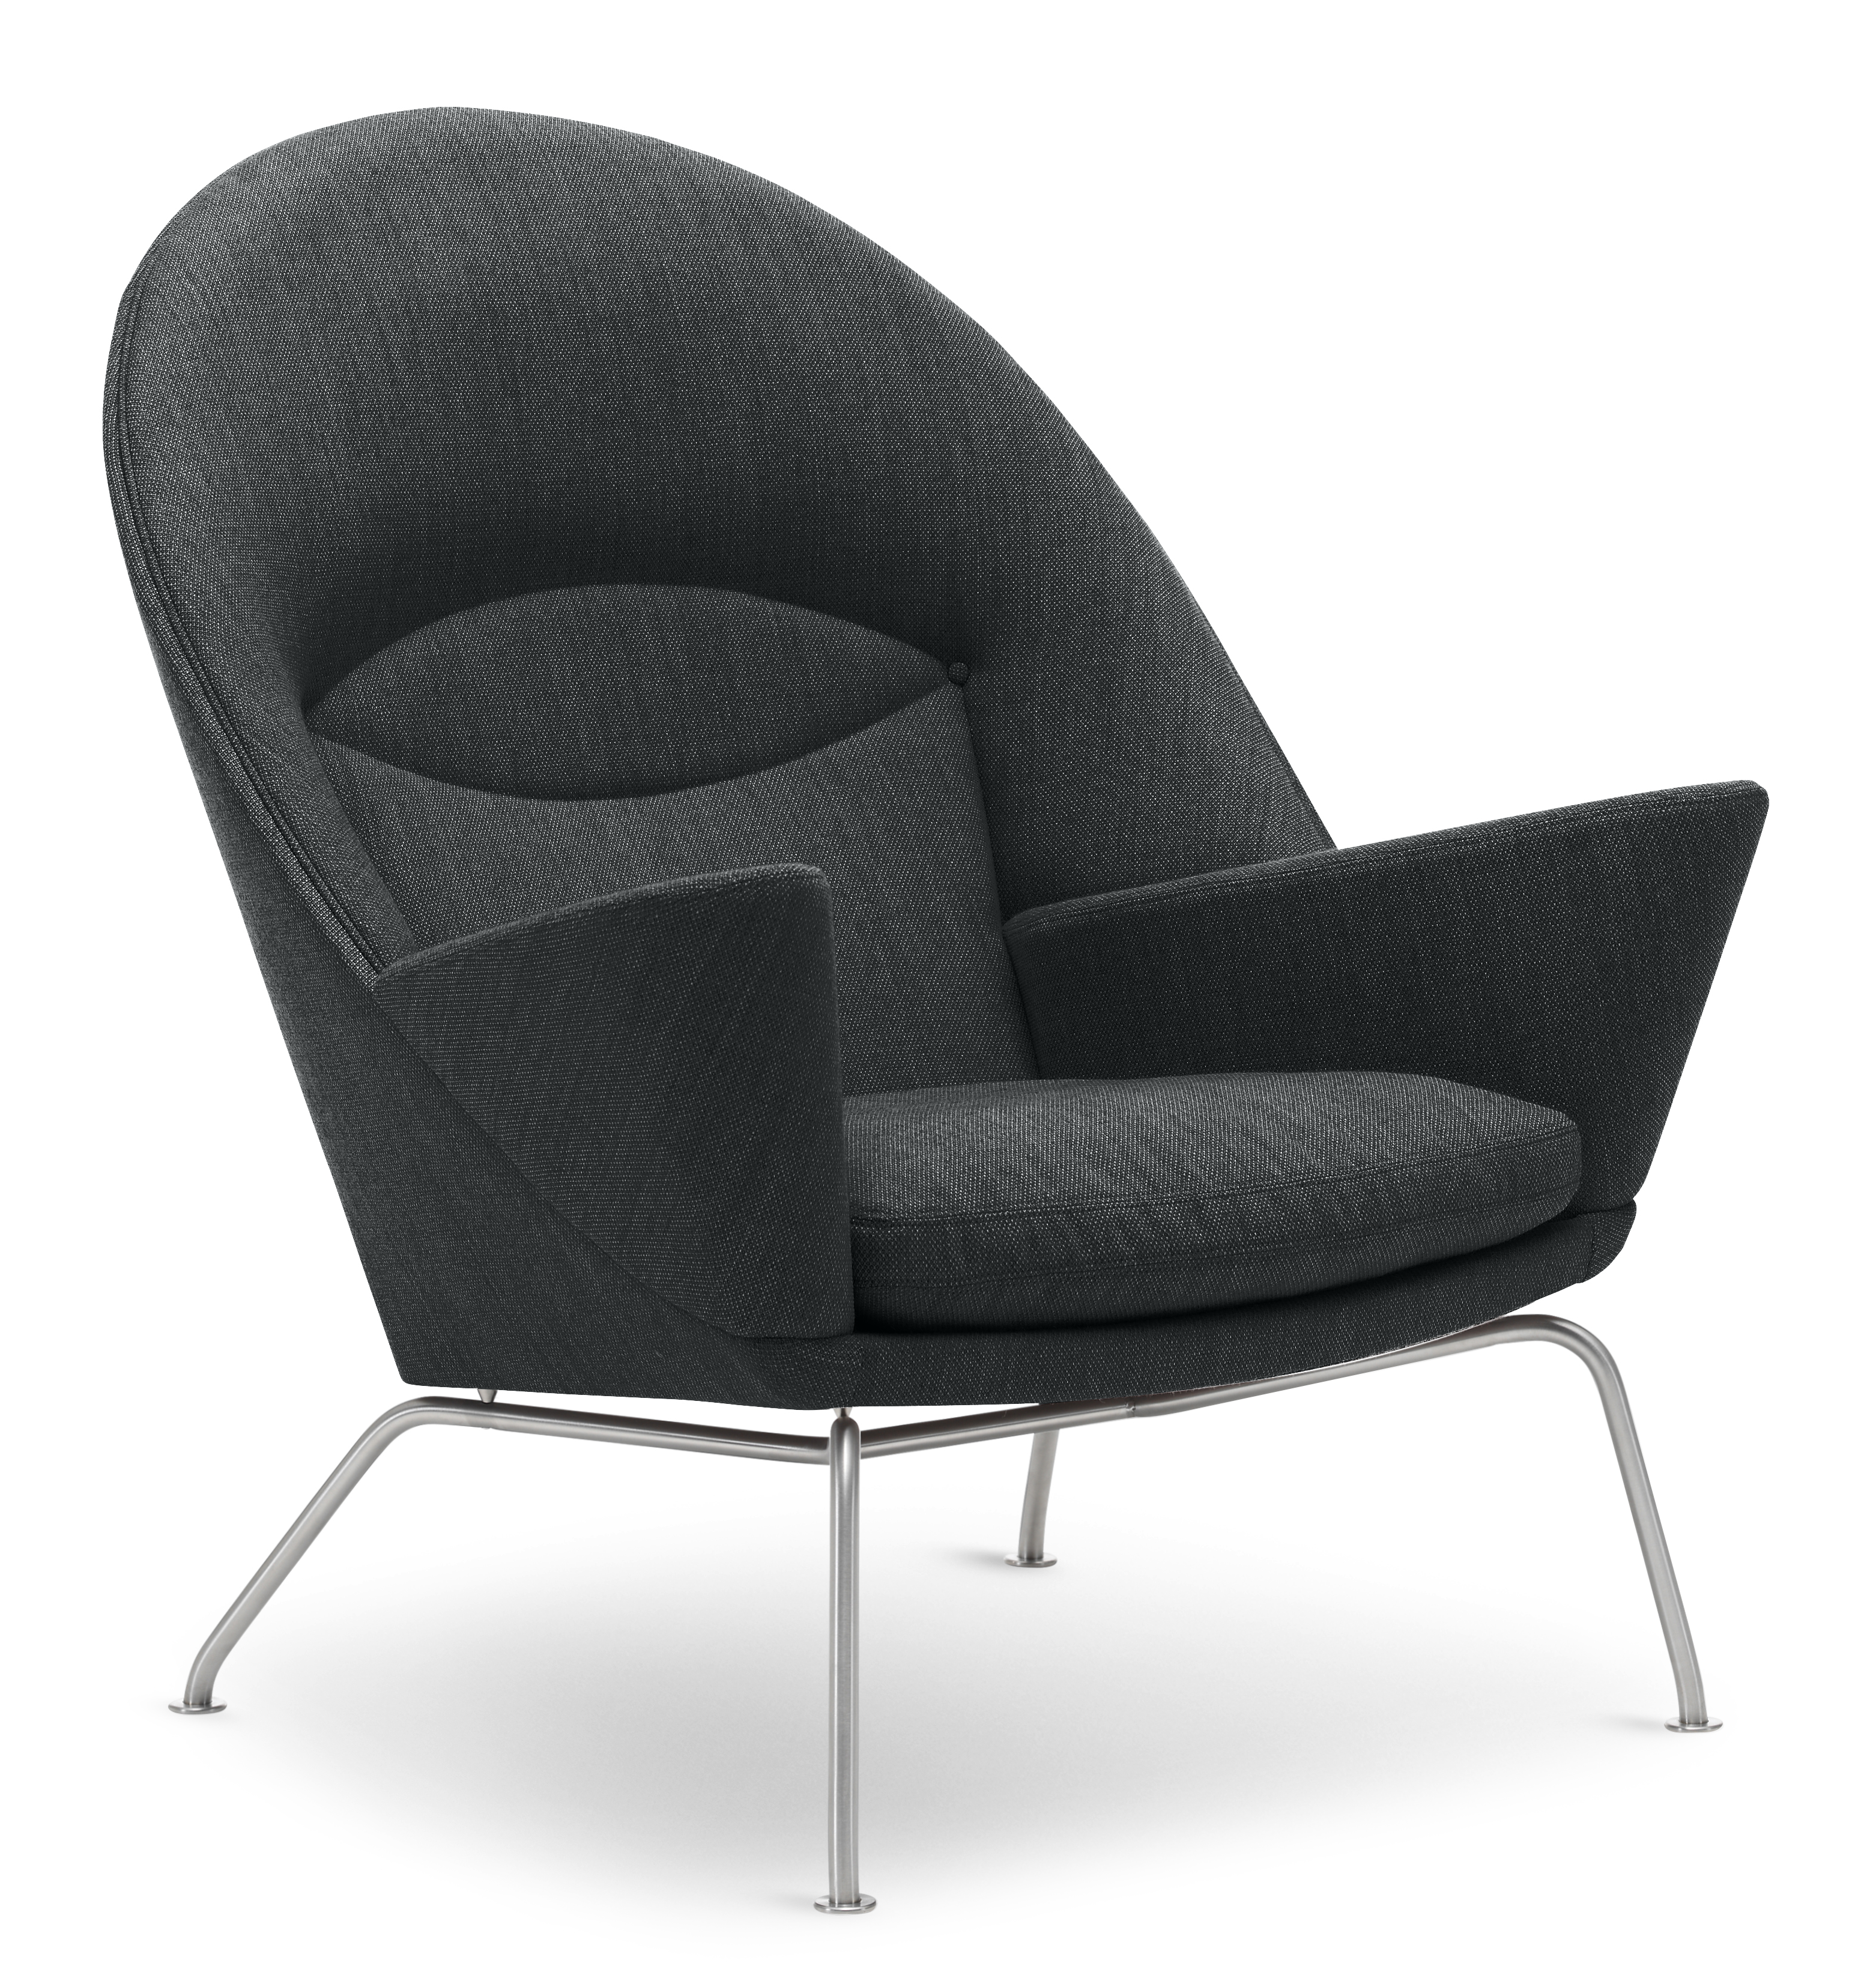 Buy CH468 Oculus Chair designed by Hans Wegner | Carl Hansen